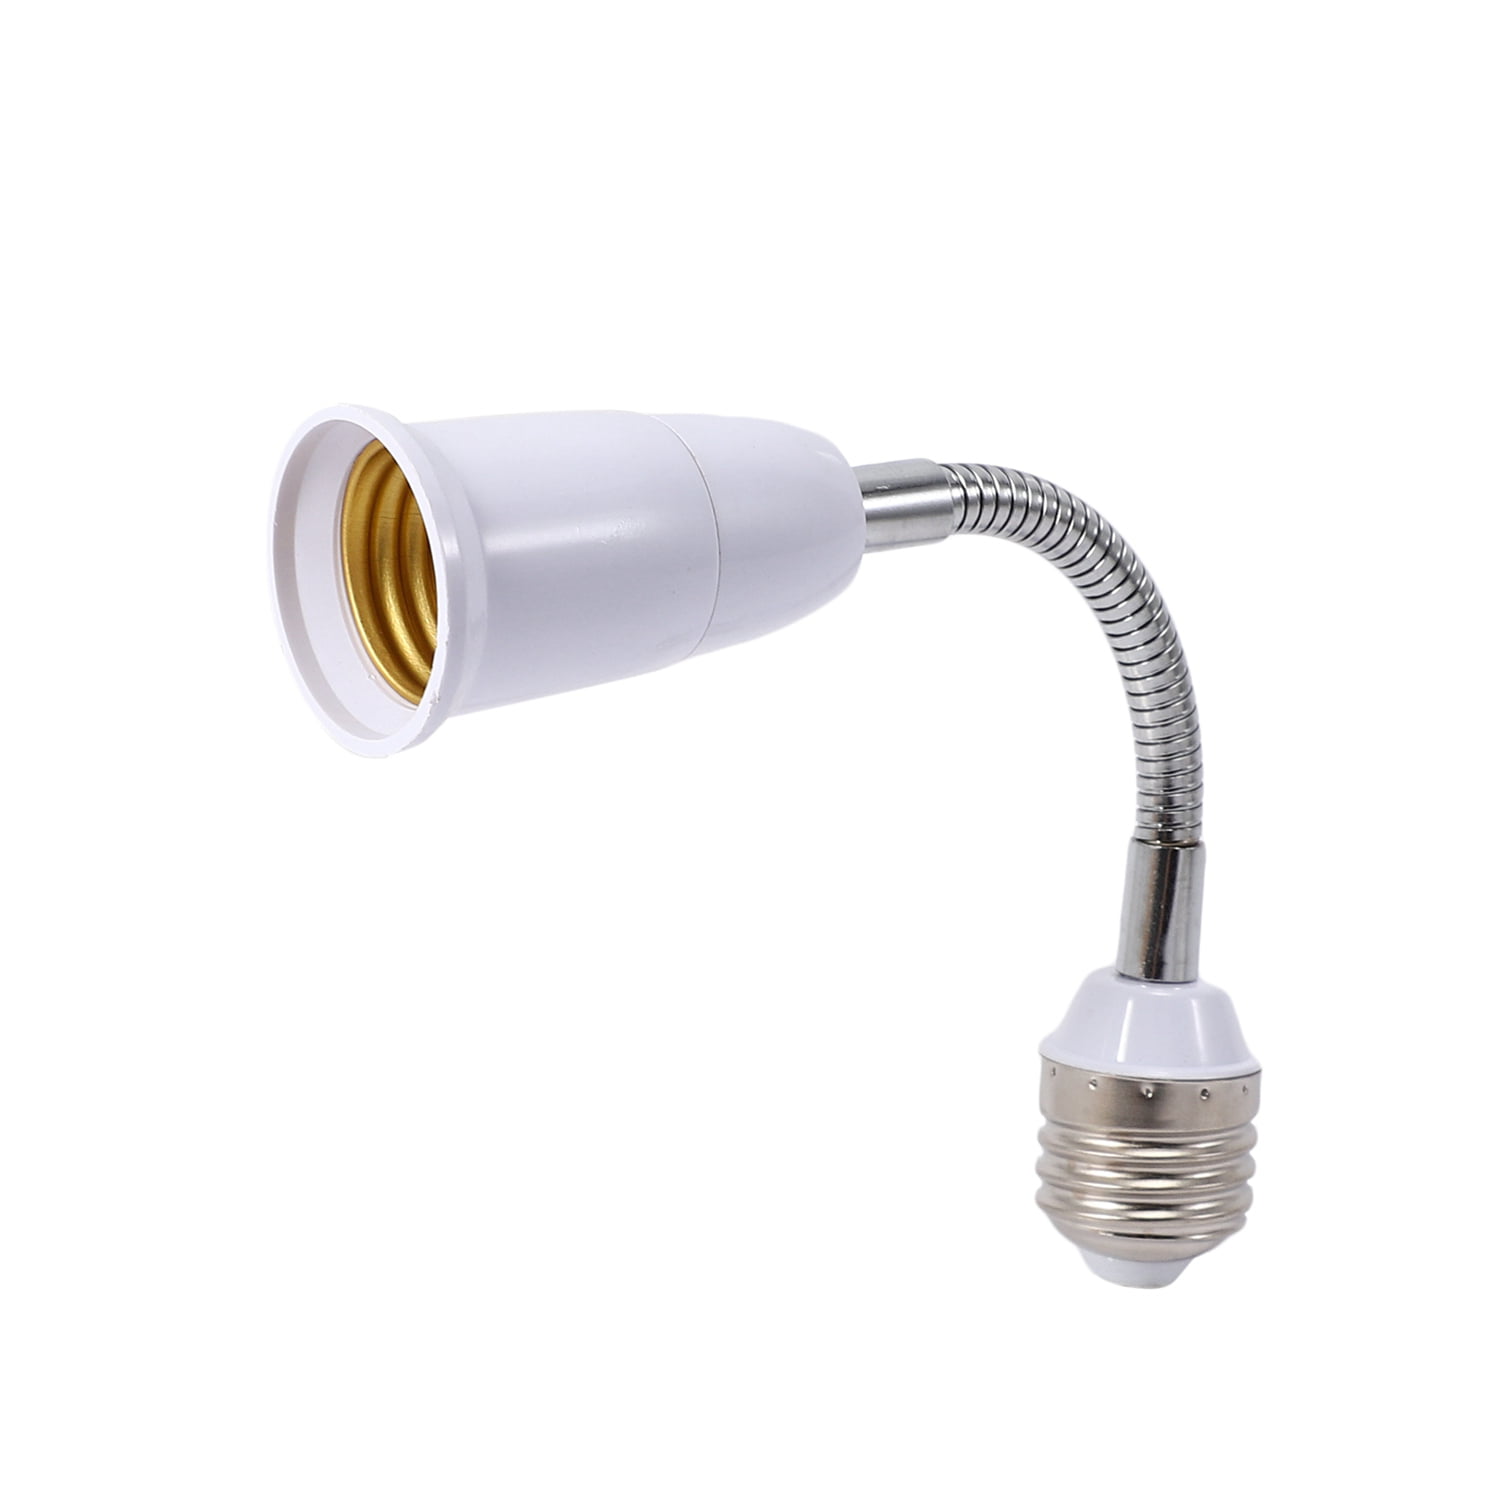 E27 to E27 light Bulb Base cord Lamp Adapter Socket Extension Holder Converters 